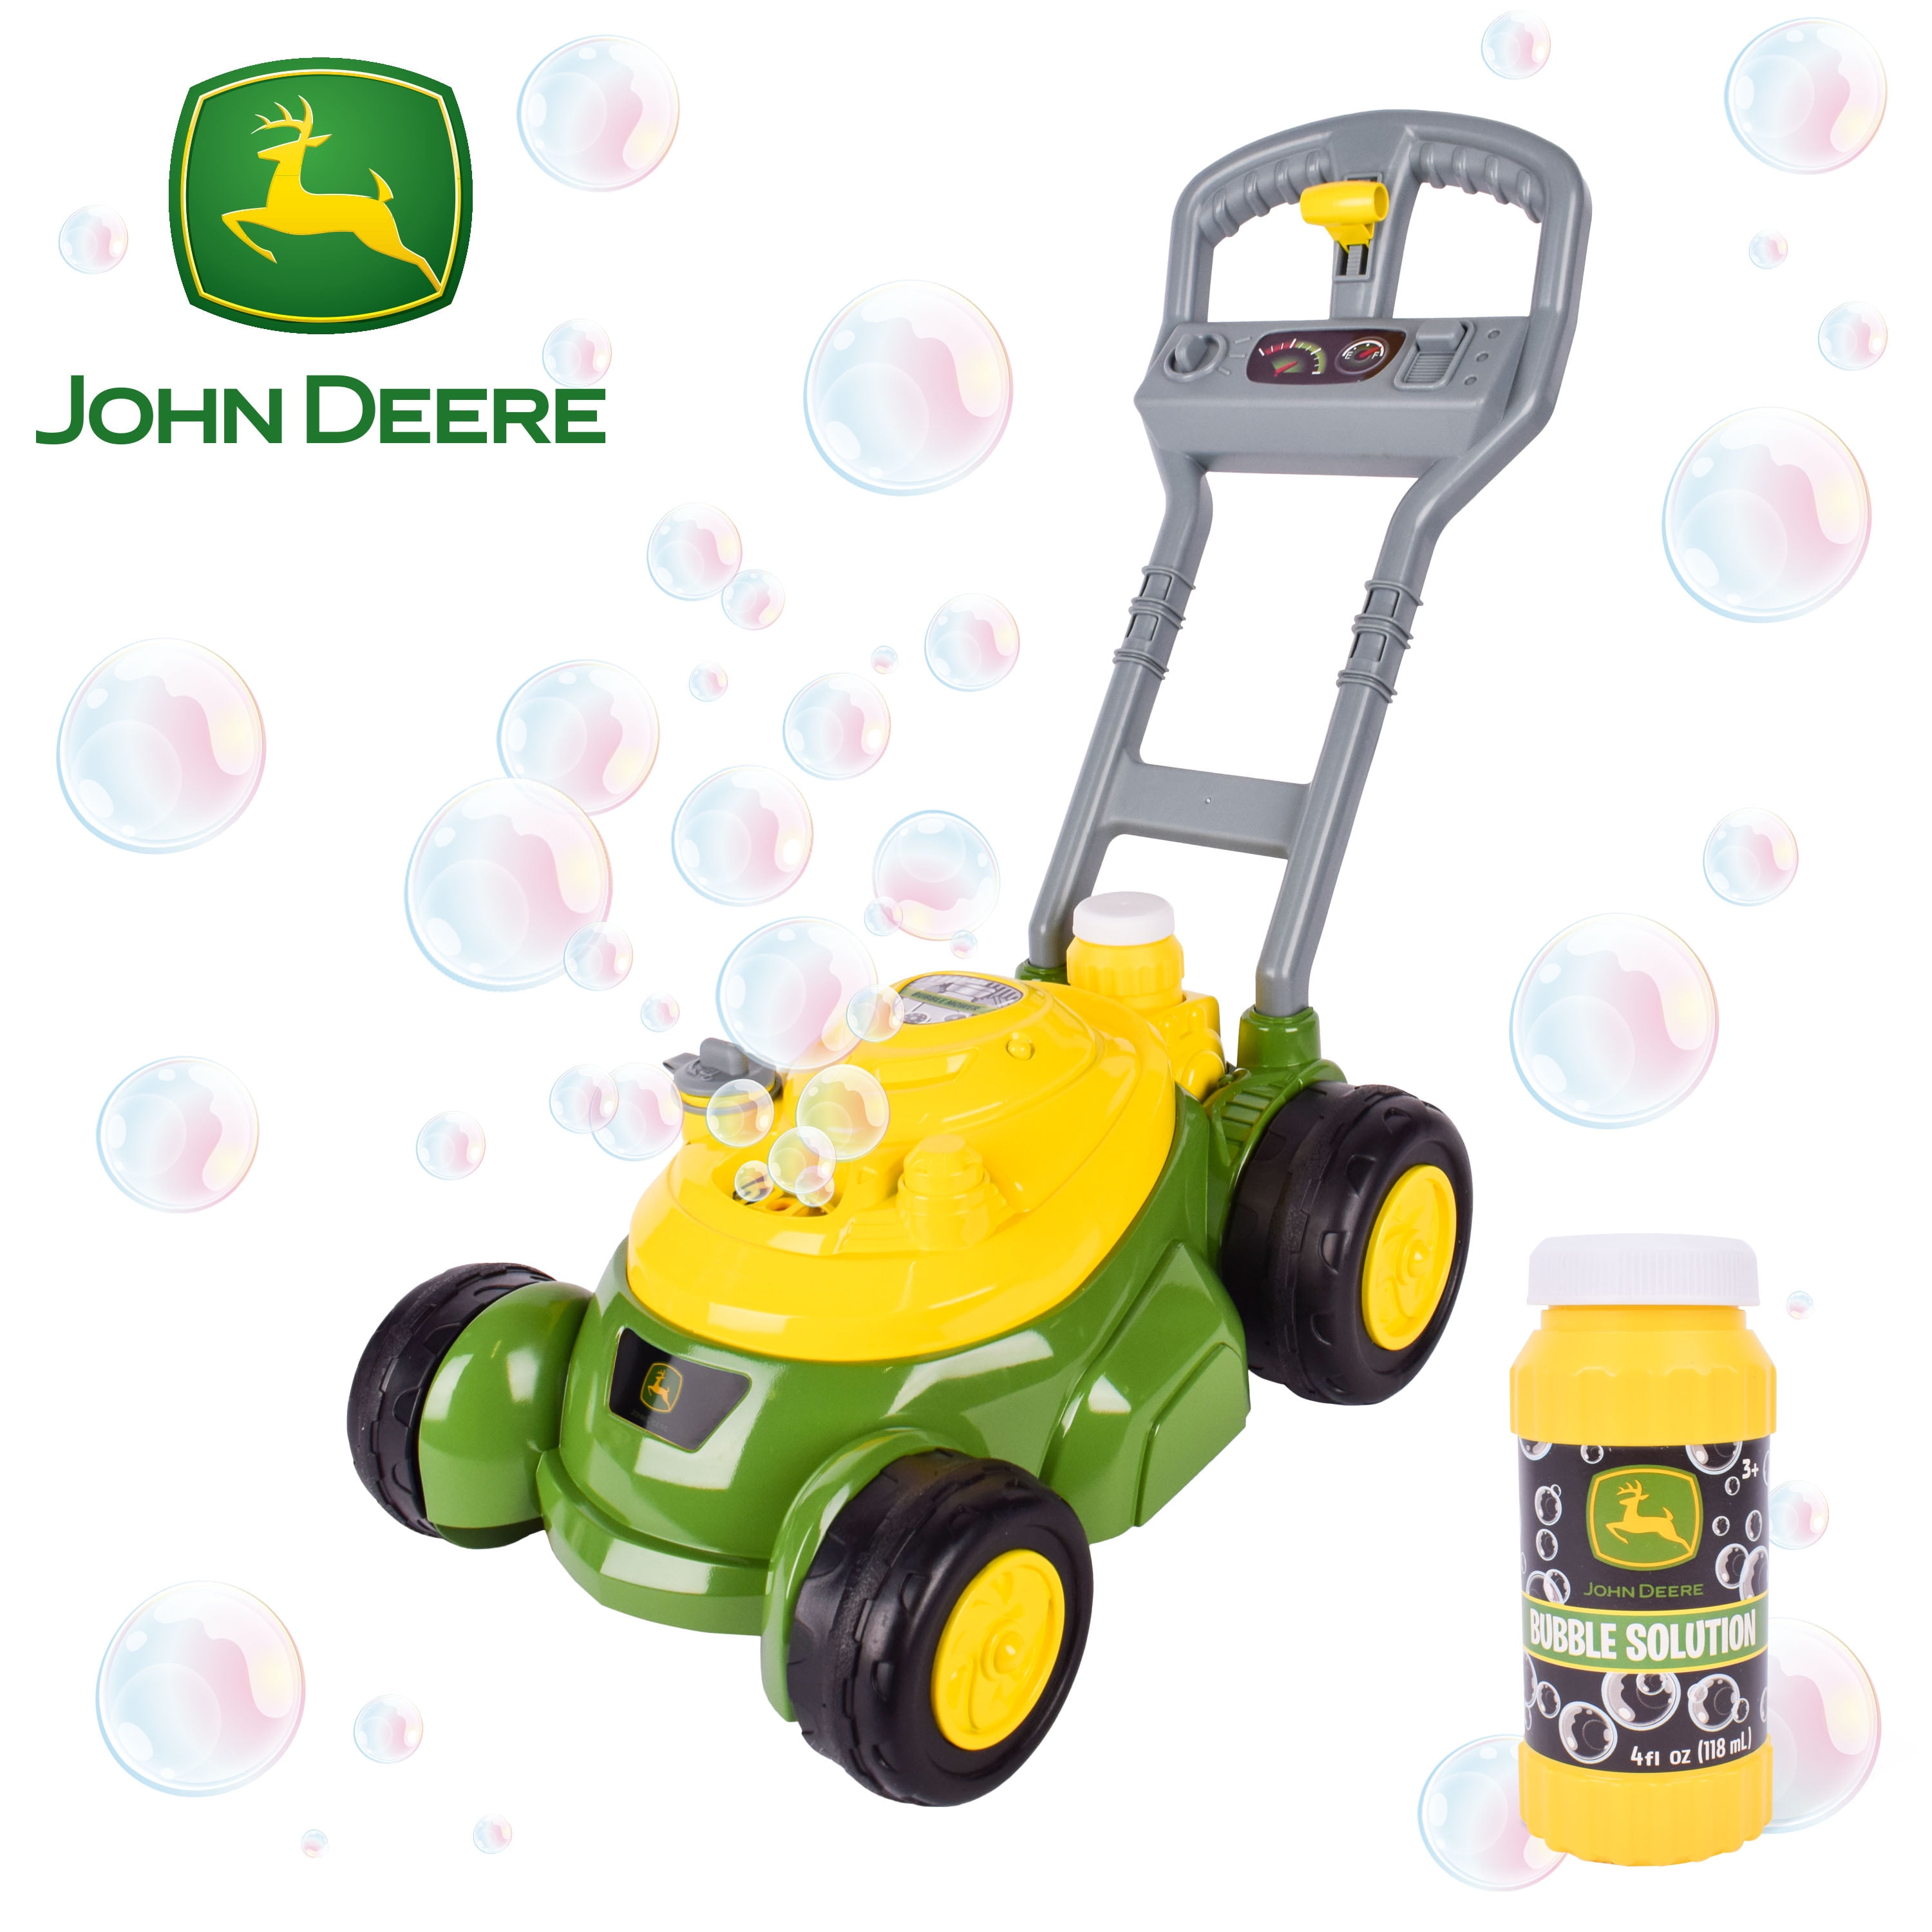 John Deere Bubble-N-Go Toy Lawn Mower Automatic Bubble Machine No